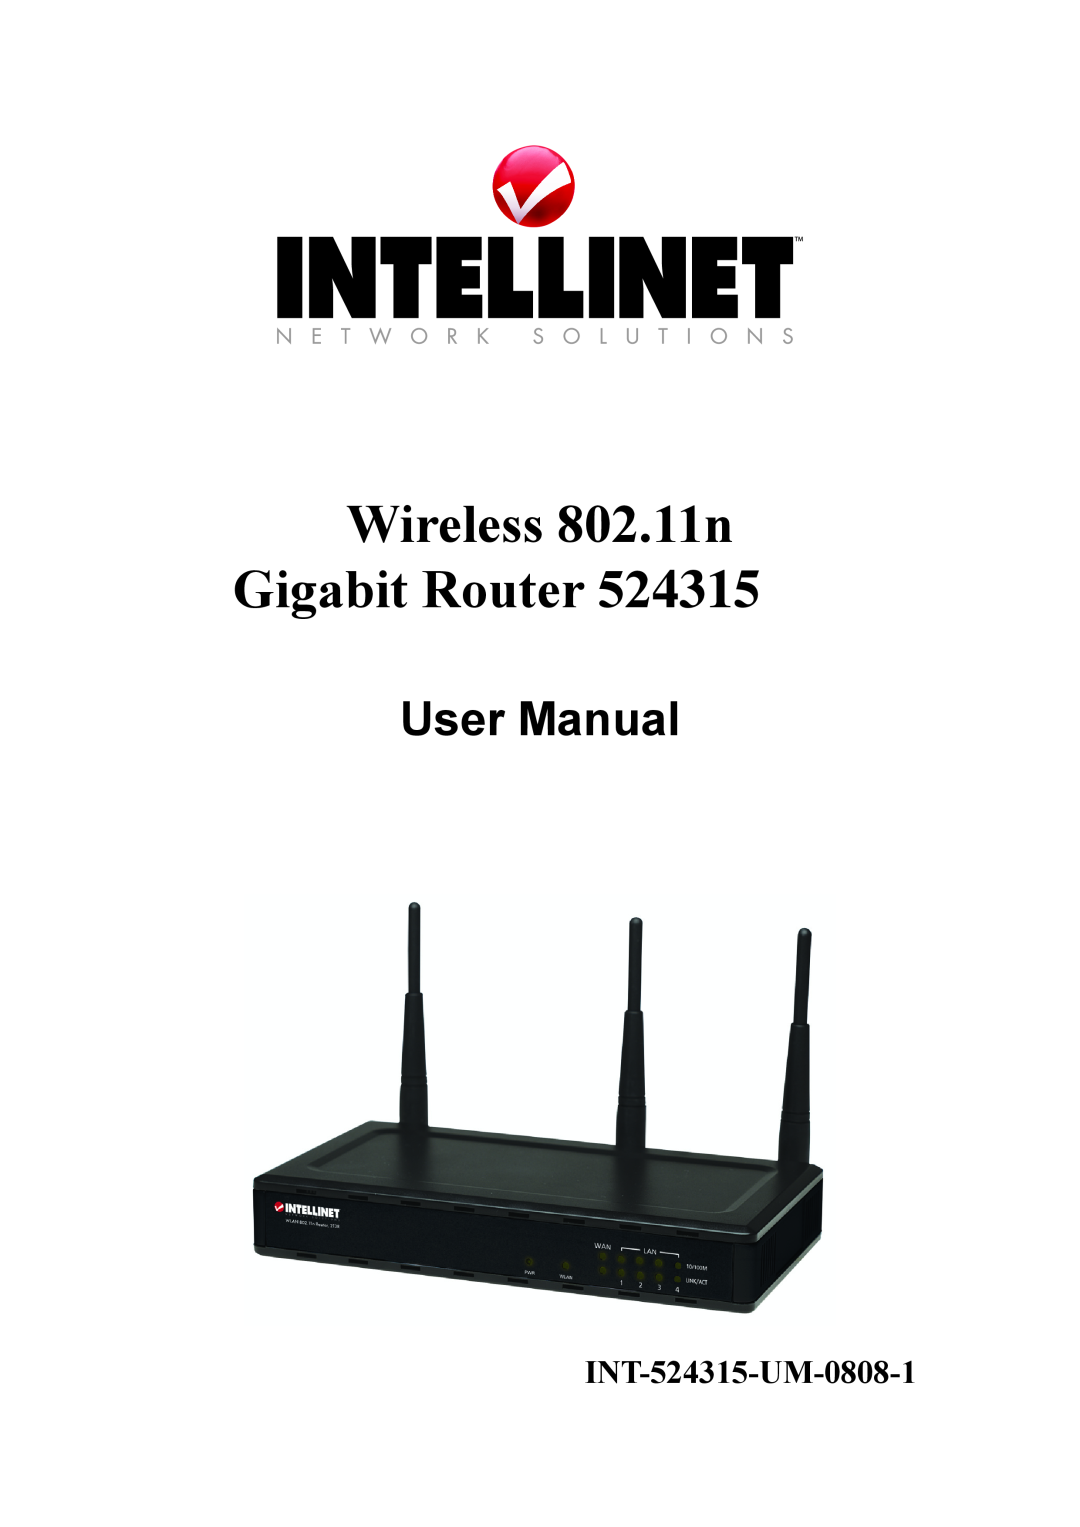 Intellinet Network Solutions INT-524315-UM-0808-1 user manual Wireless 802.11n Gigabit Router, User Manual 